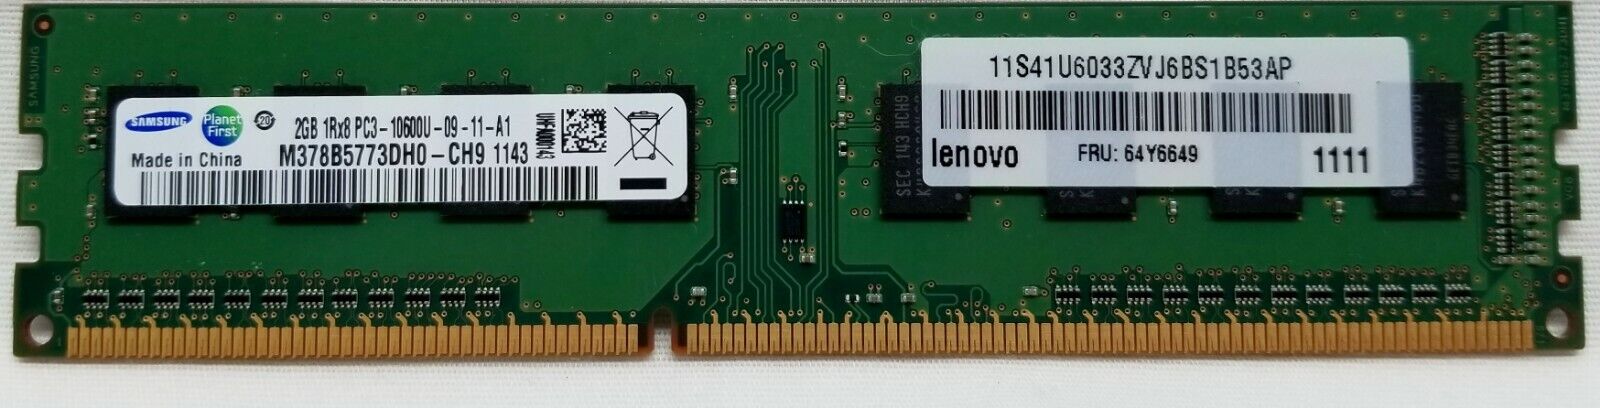 Samsung 2GB 1RX8 PC3 10600U  09 - 11- A1 desktop memory M378B5773DHO - CH9